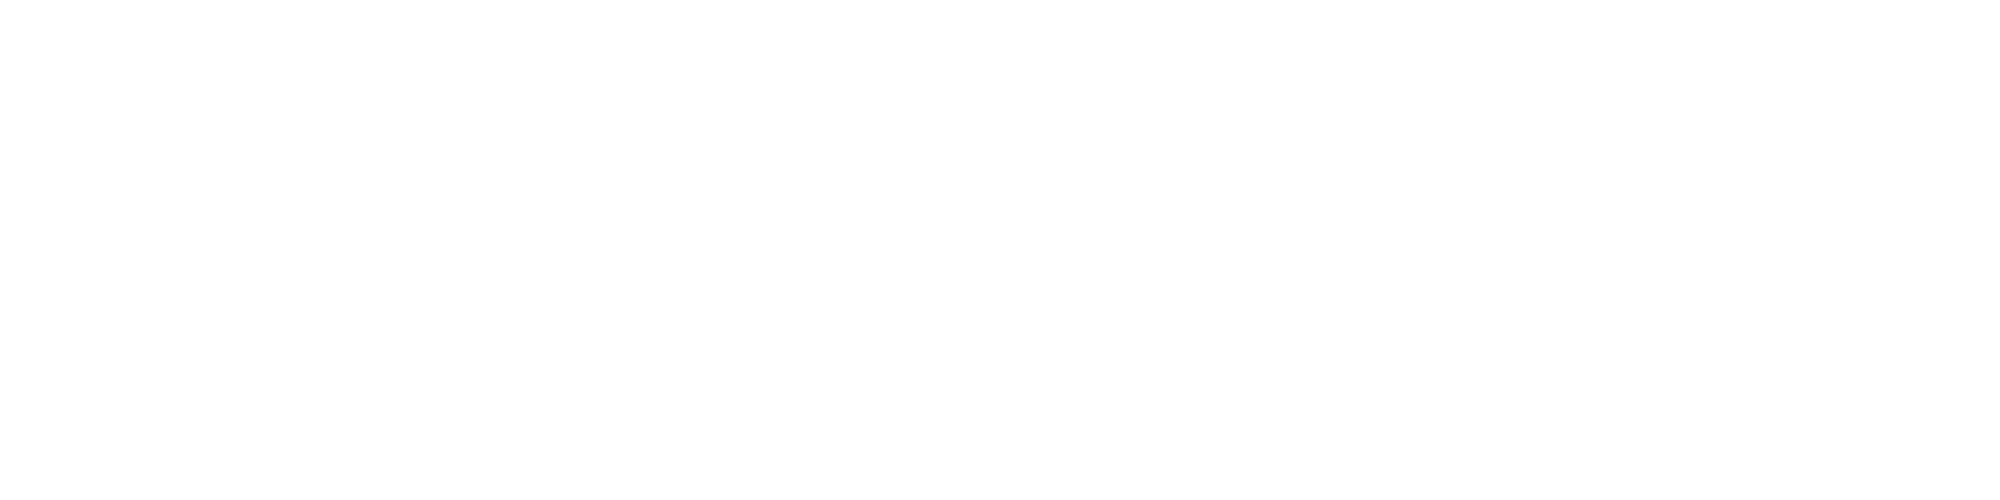 melbourne_water_logo_500x2000